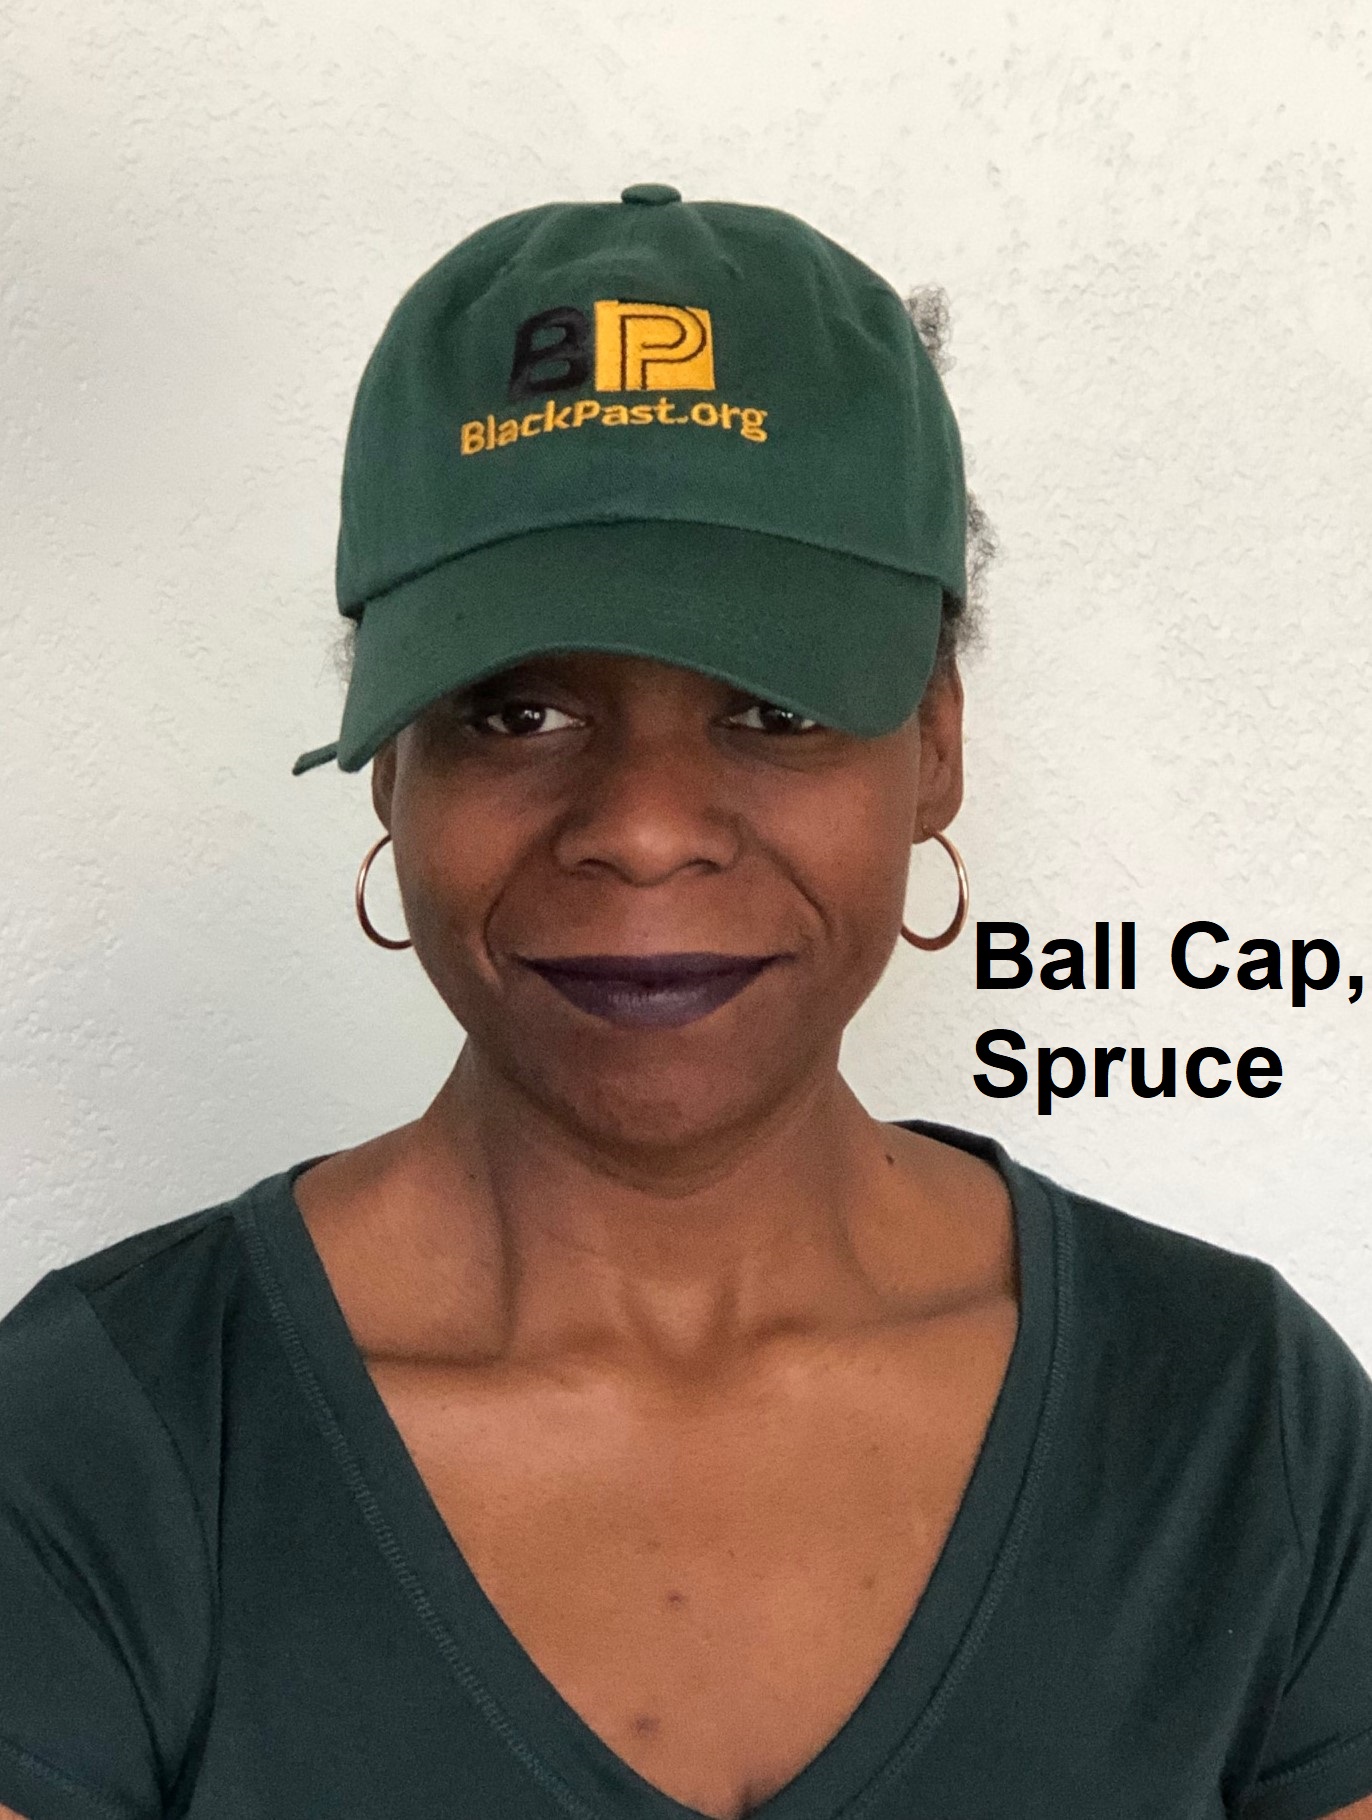 Ball Cap, Spruce